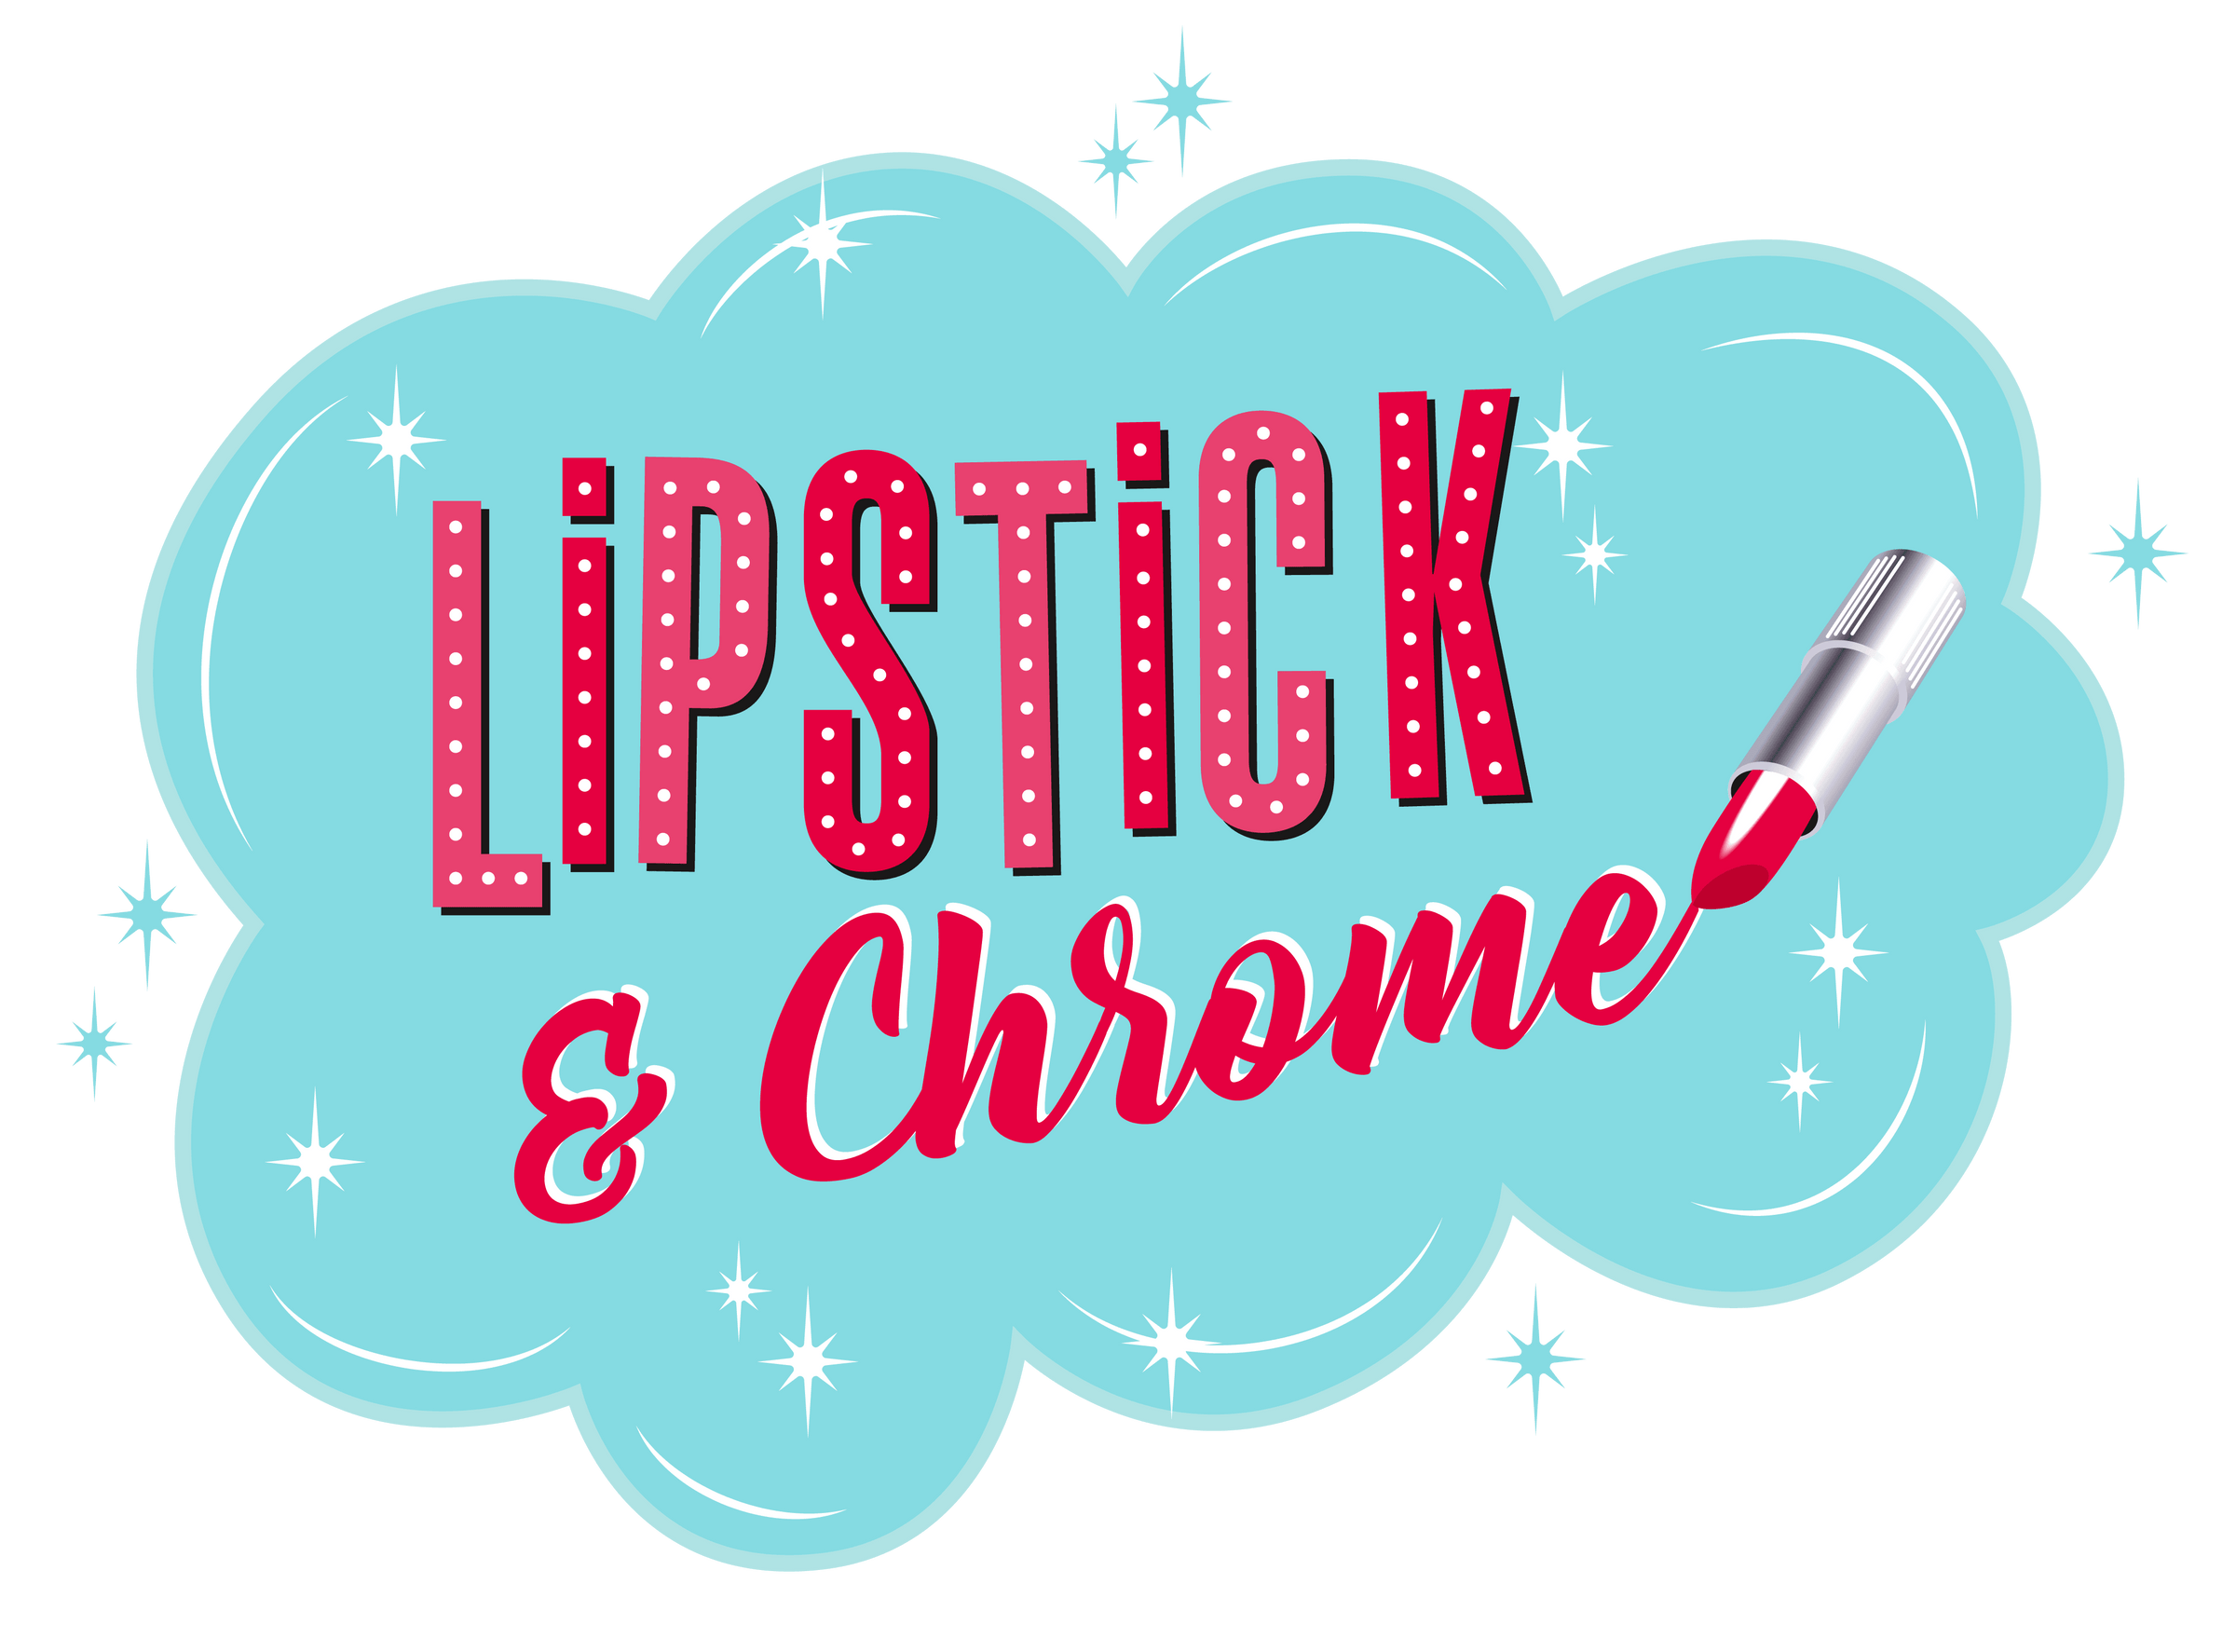 Lipstick & Chrome - Quirks!